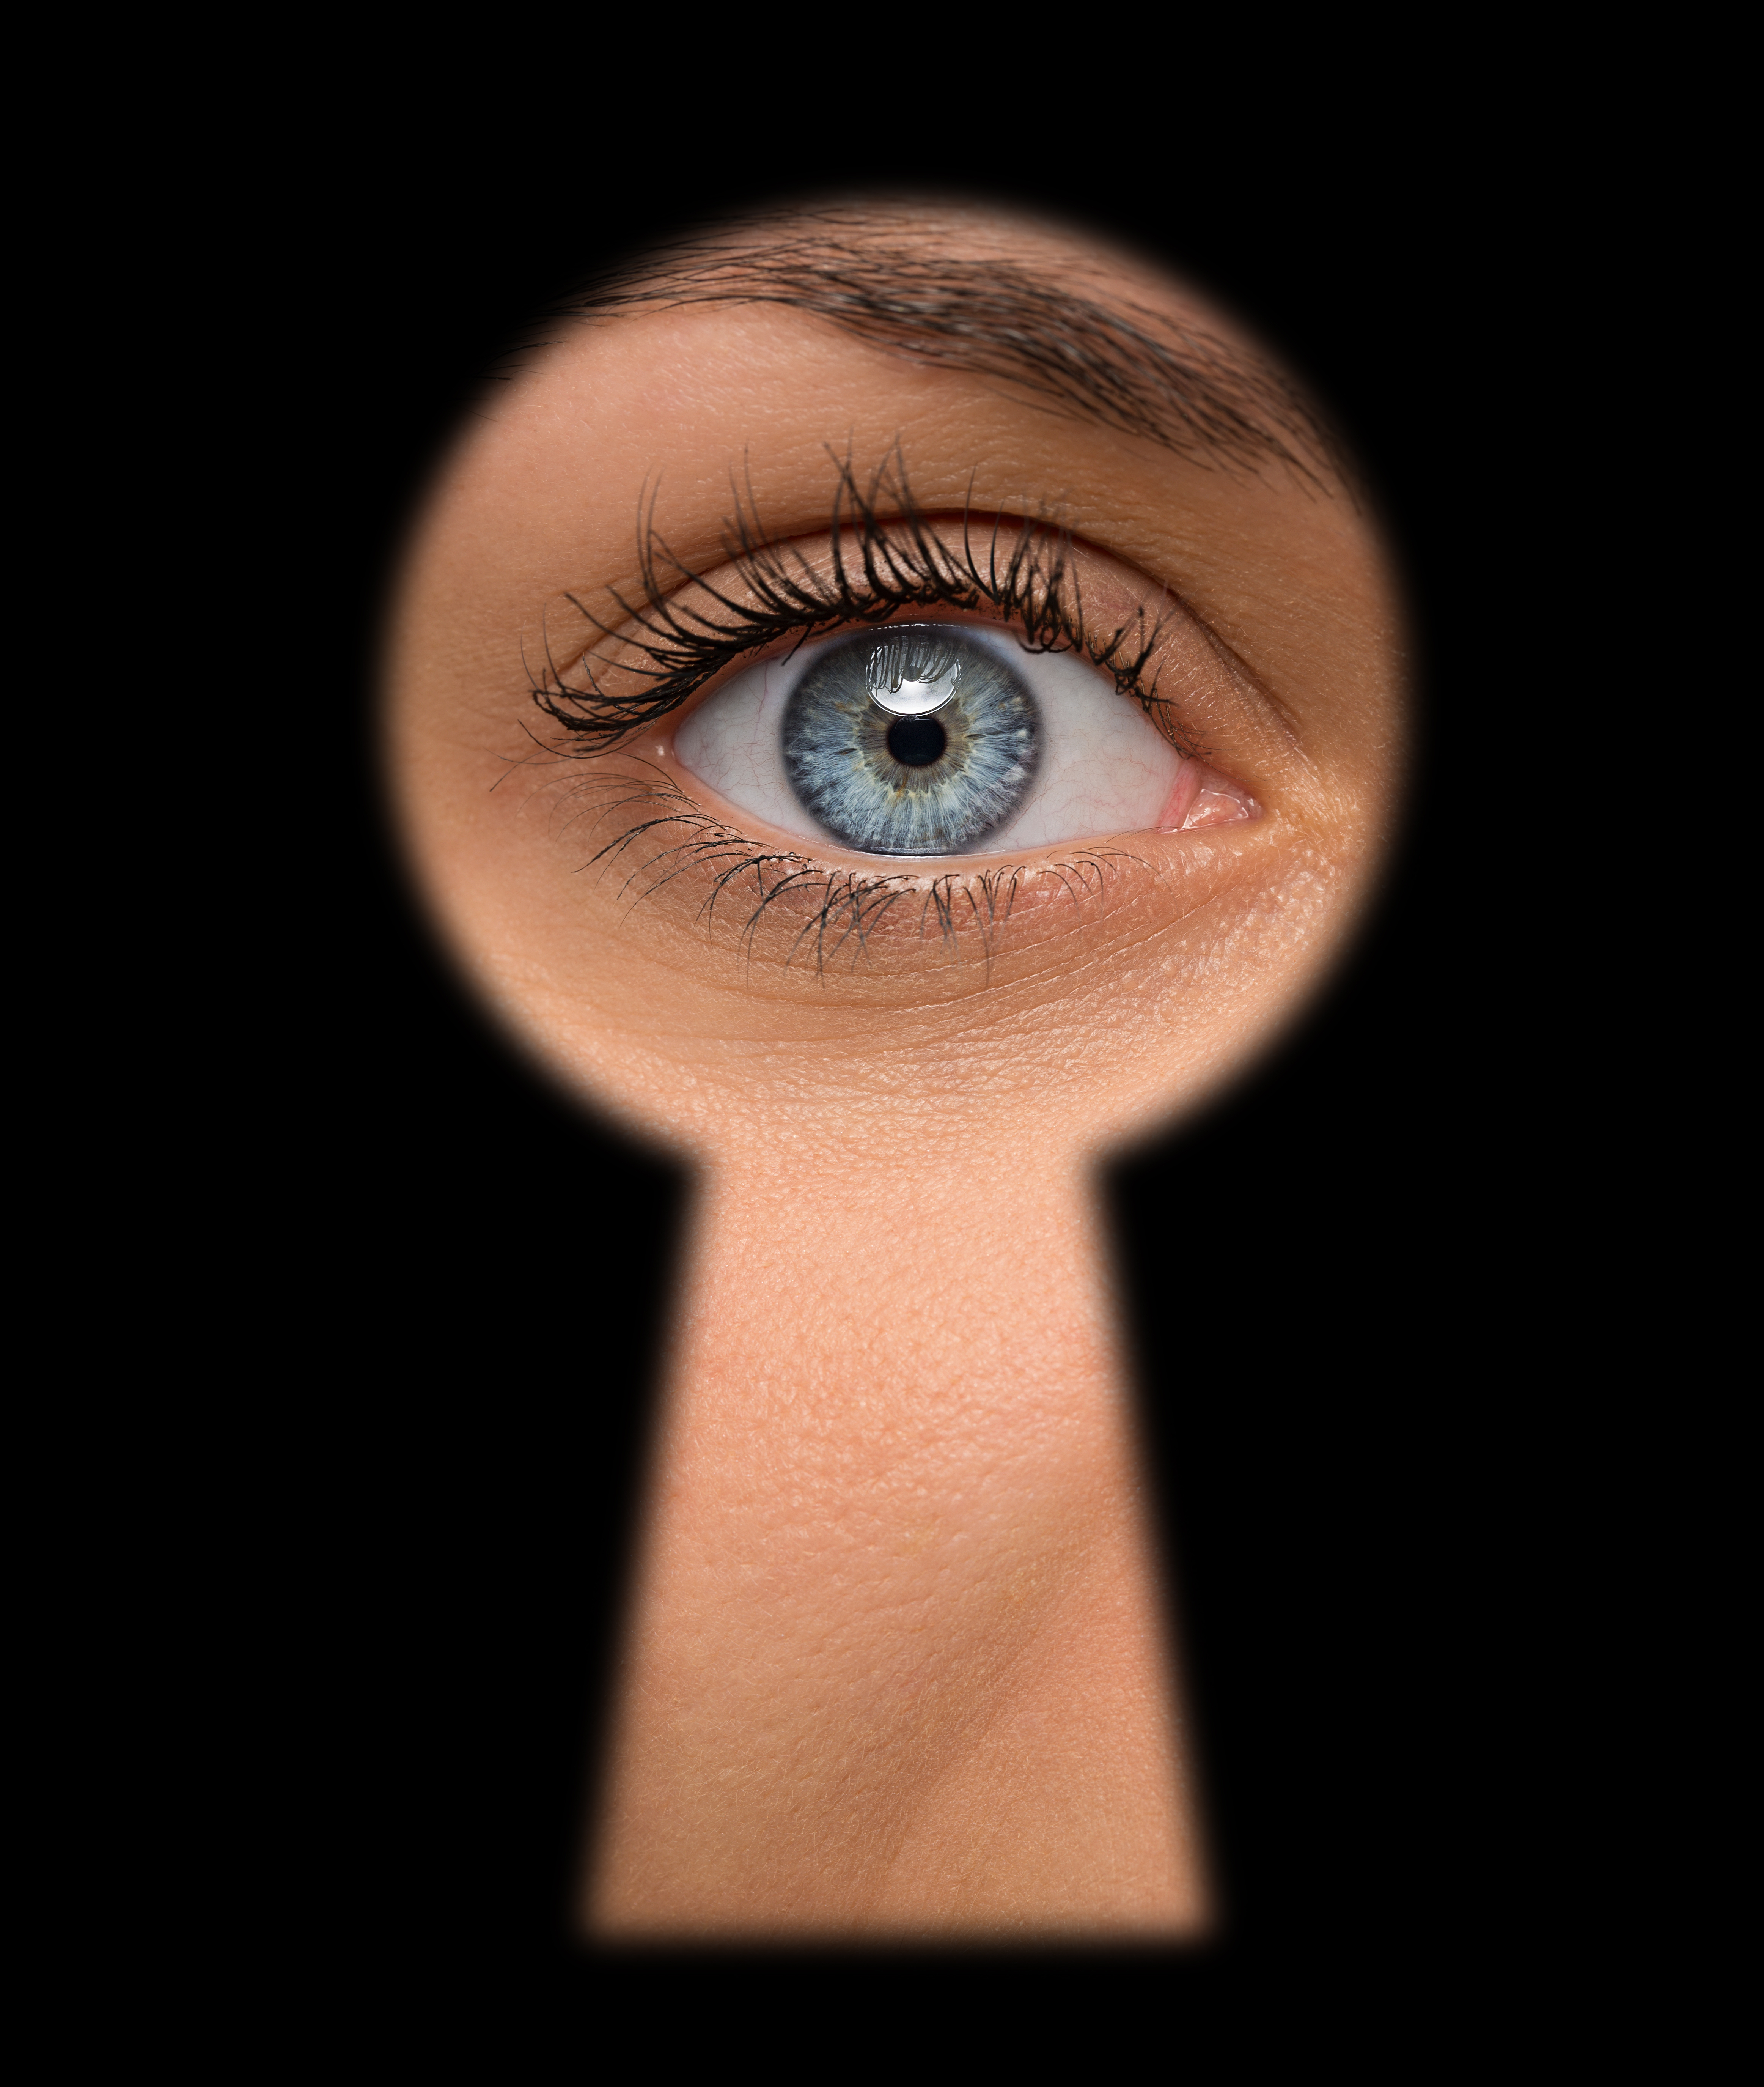 A blue-eyed woman peeps through a key hole | Source: Shutterstock